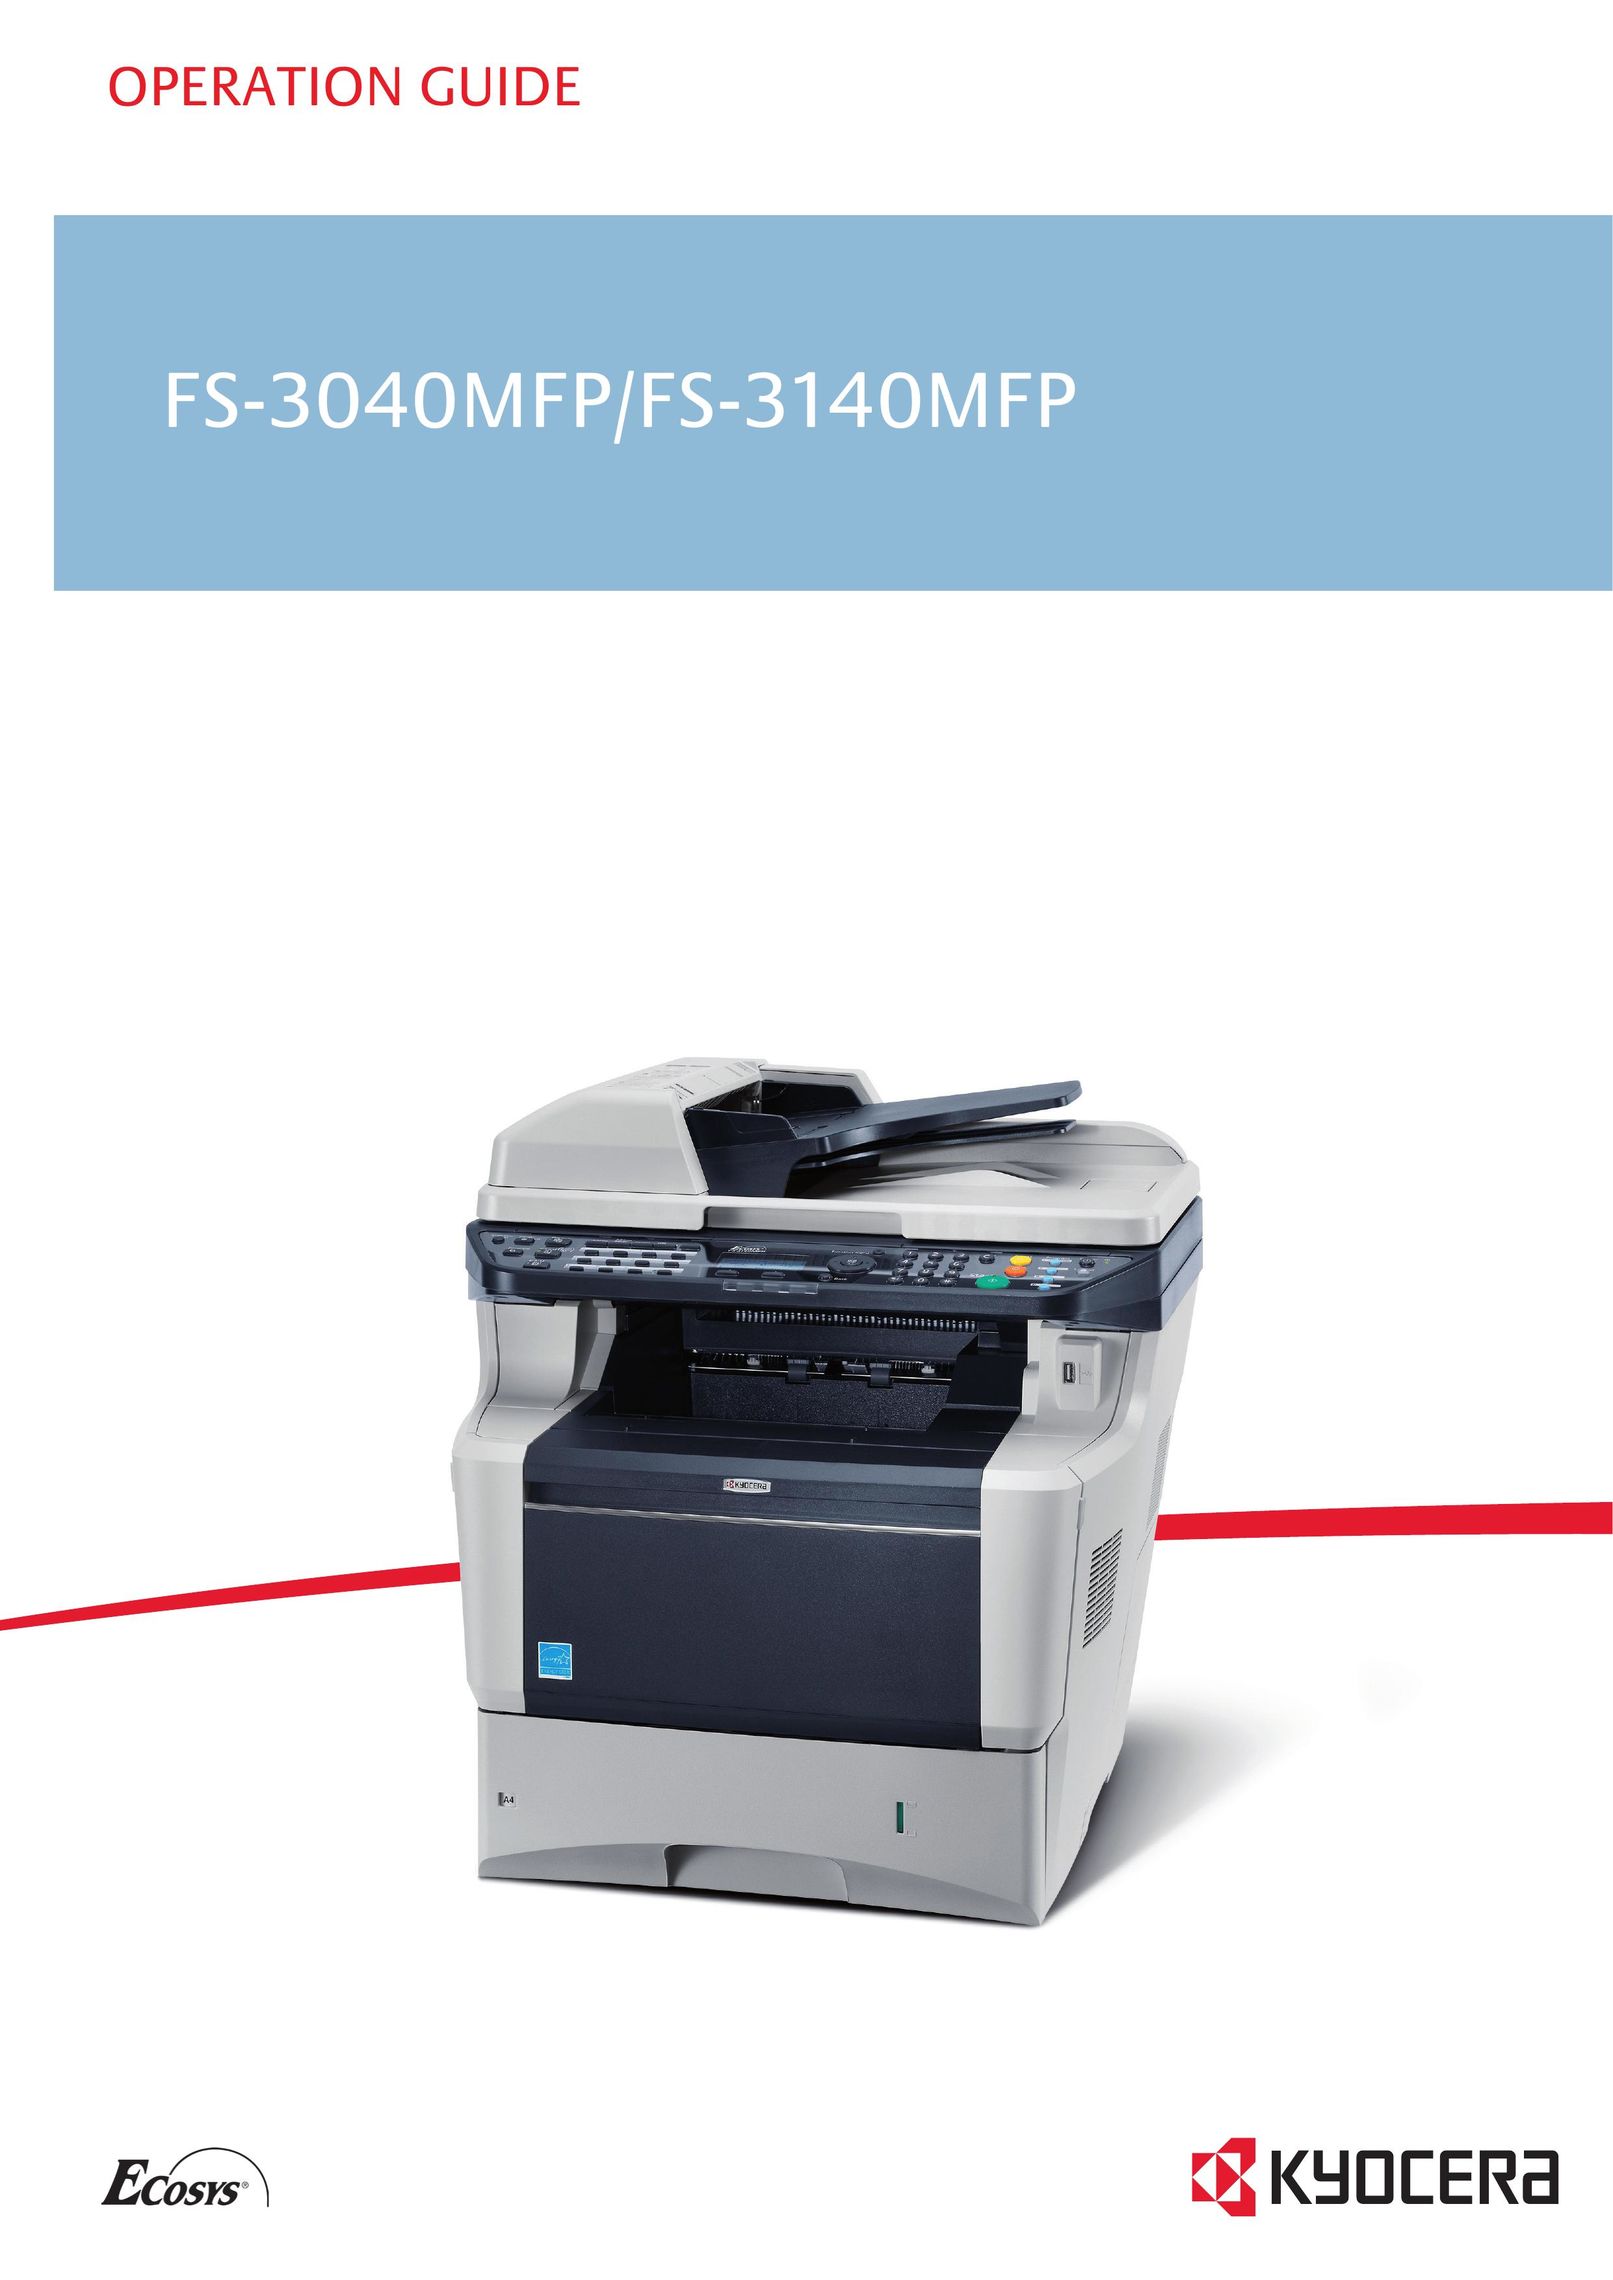 Kyocera FS-3040MFP Printer User Manual